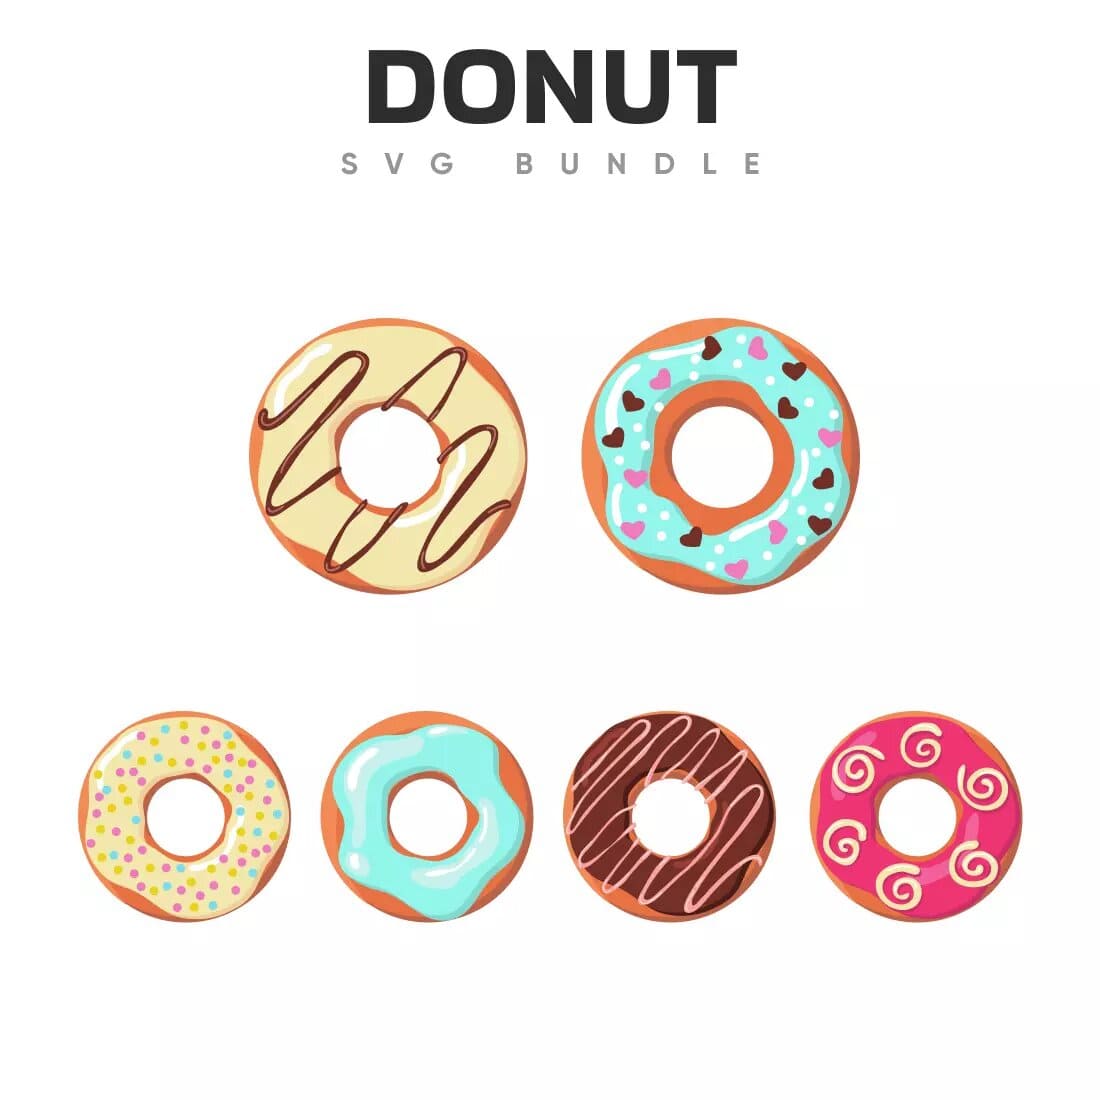 Donut SVG Bundle Preview 5.